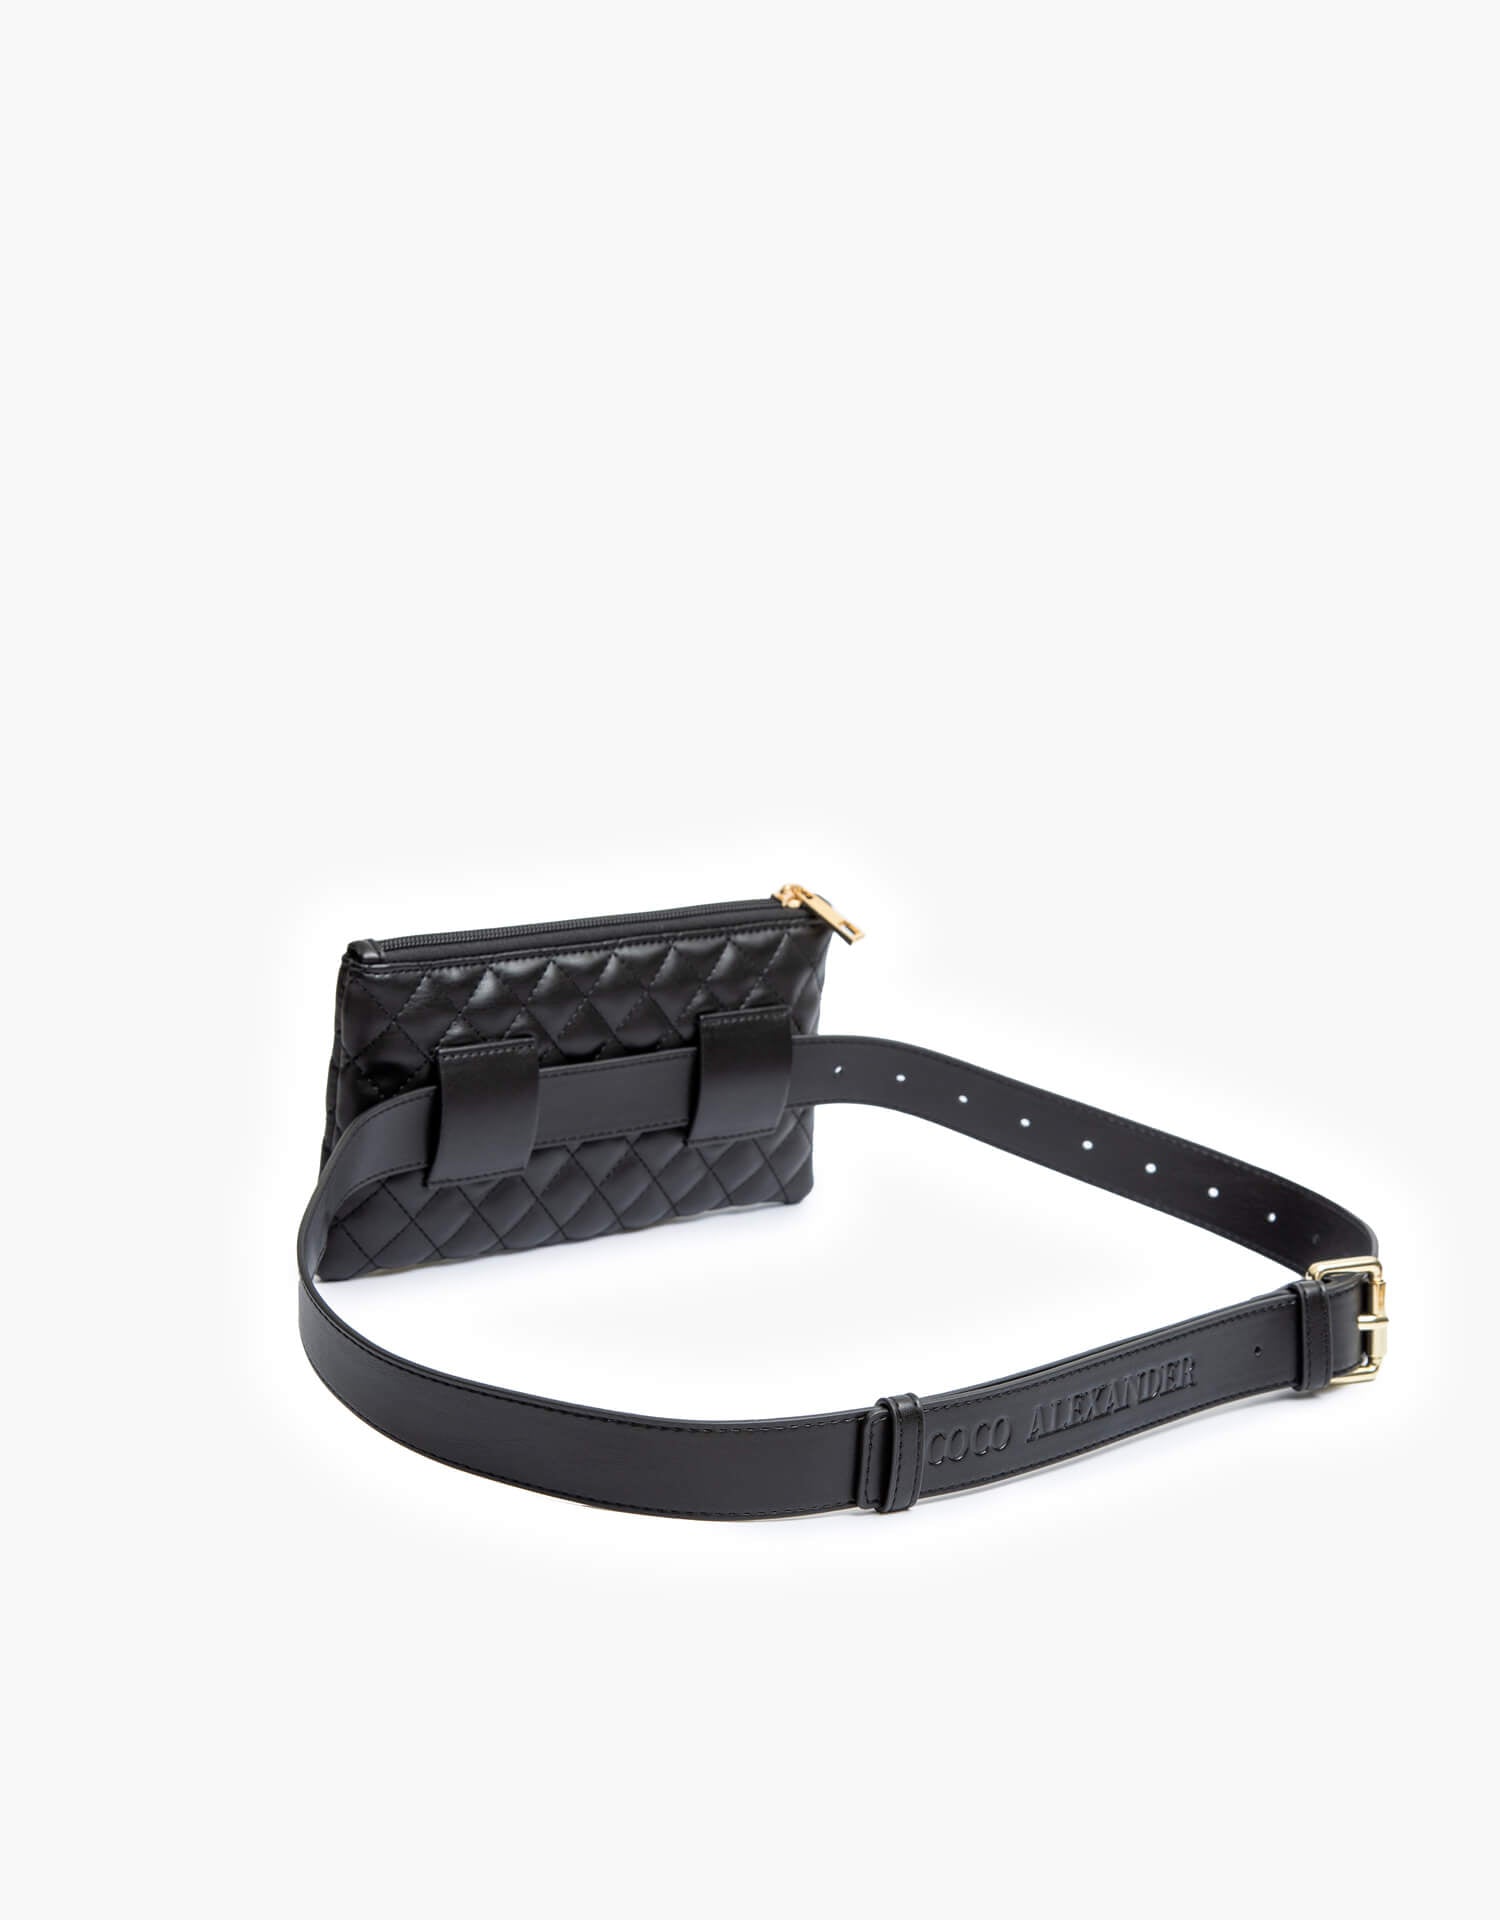 coco alexander mini vegan leather bag with belt strap